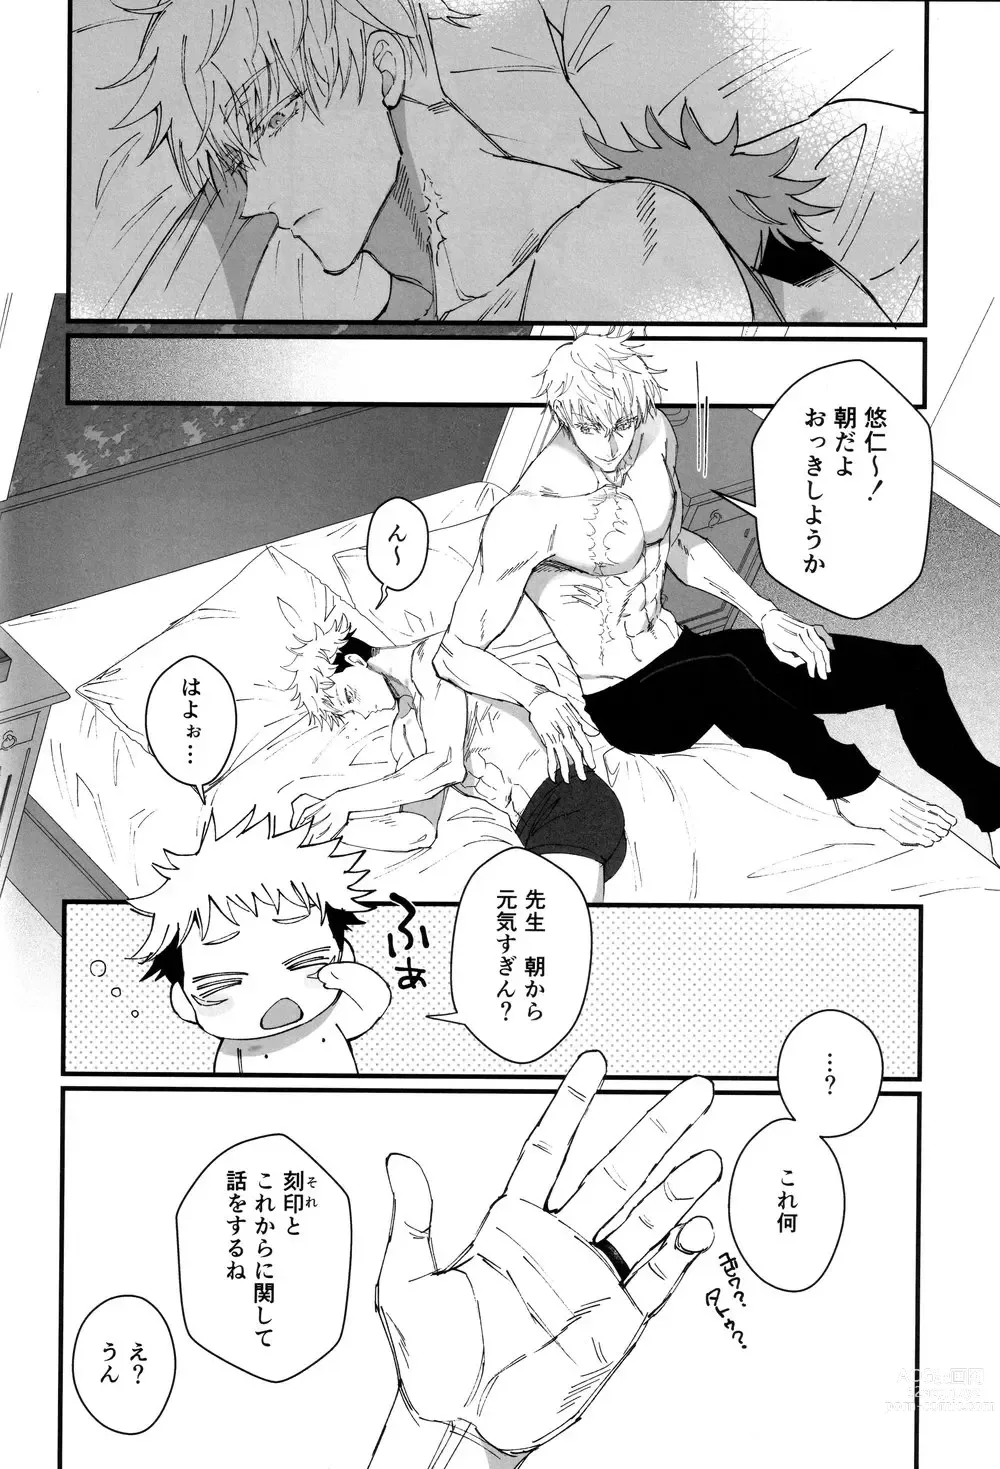 Page 29 of doujinshi Zoku Gachikoi Monster